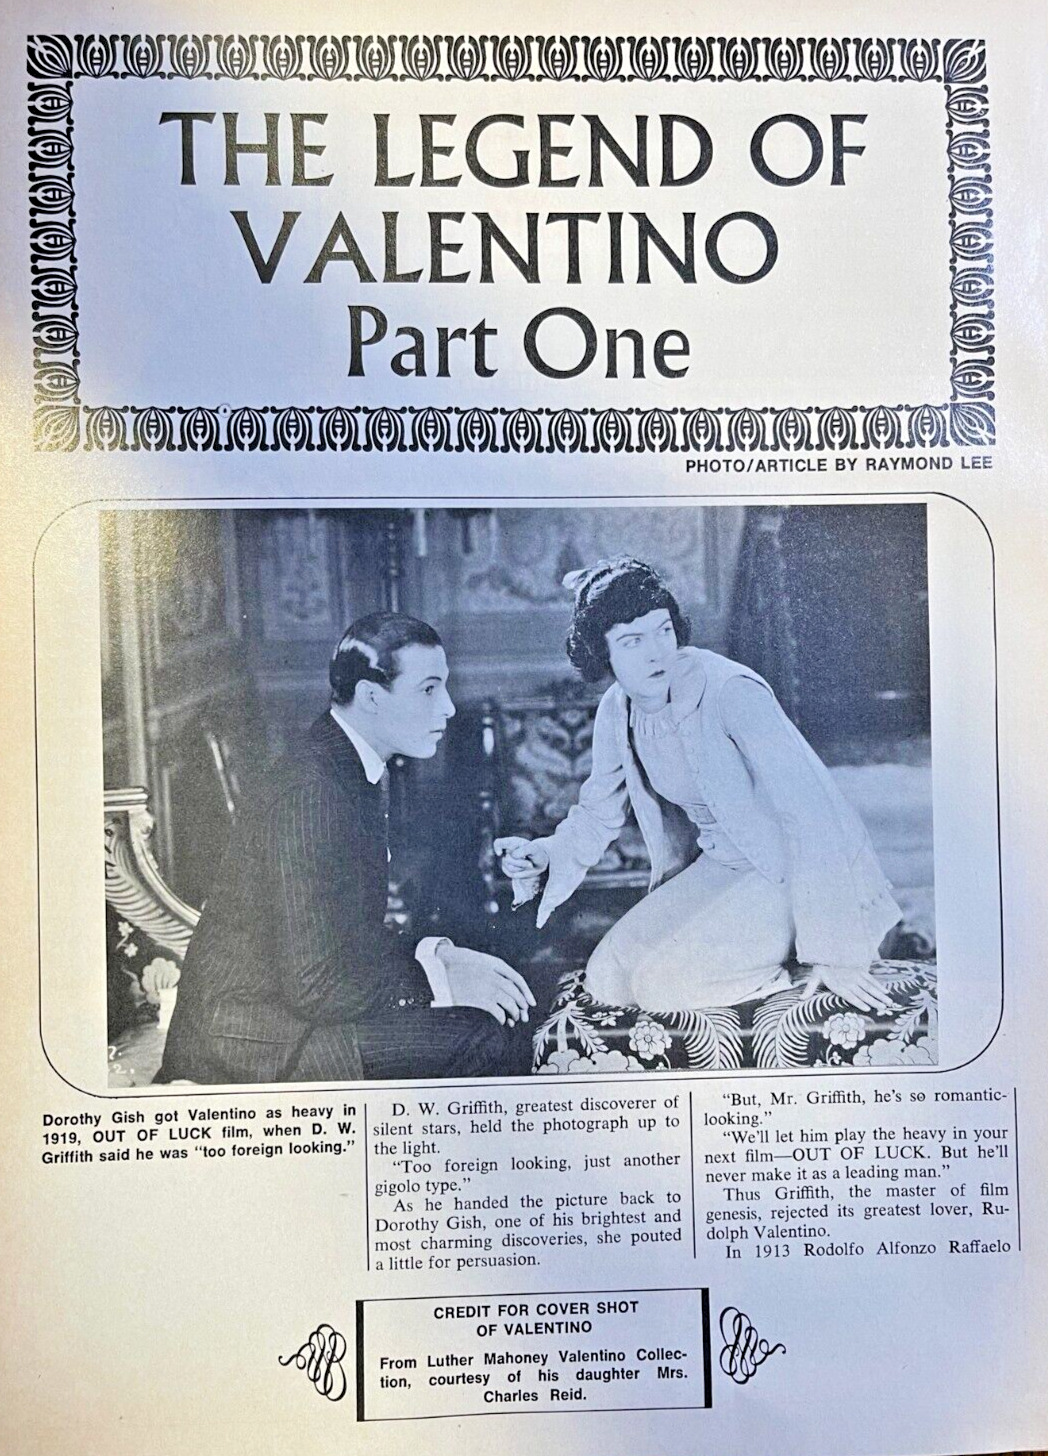 1973 Actor Rudolph Valentino illustrated